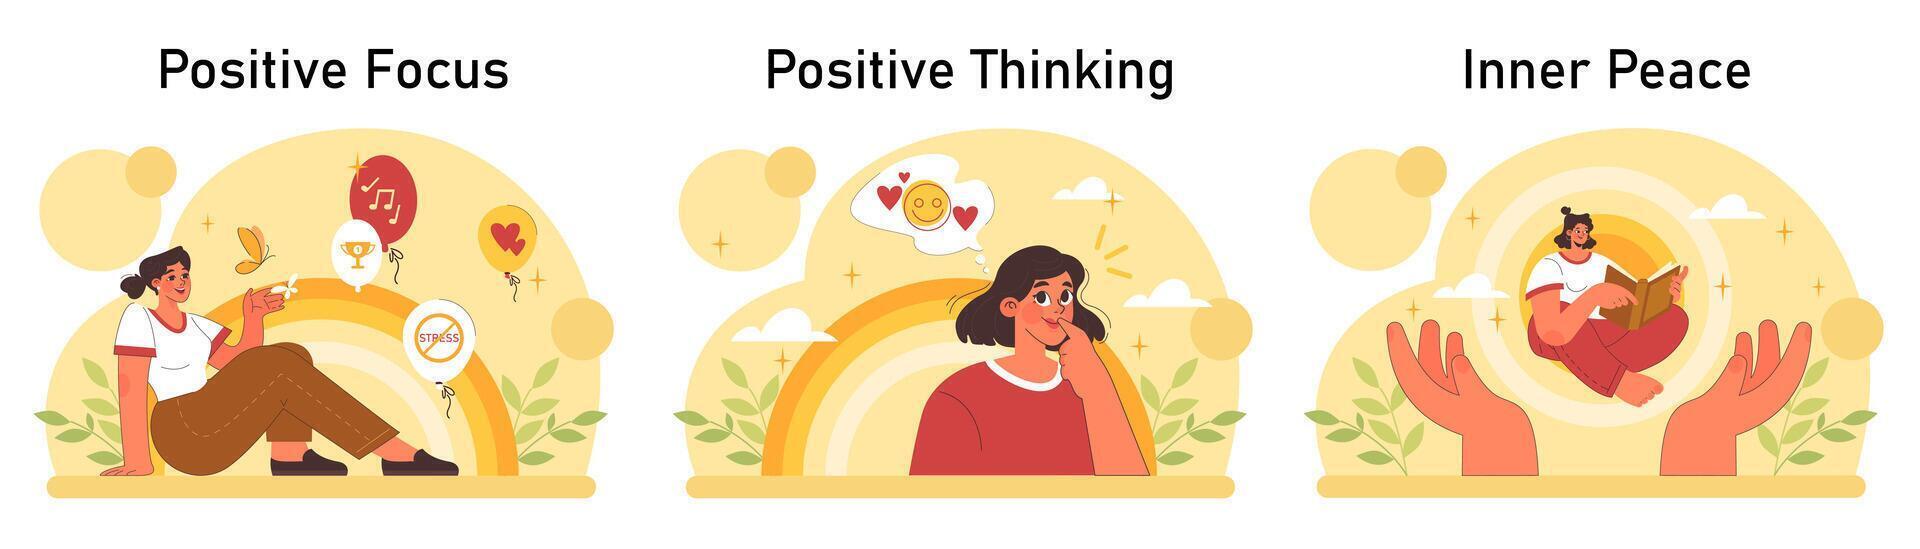 positivo psicologia definir. positivo pensando e atitude. otimista mentalidade vetor